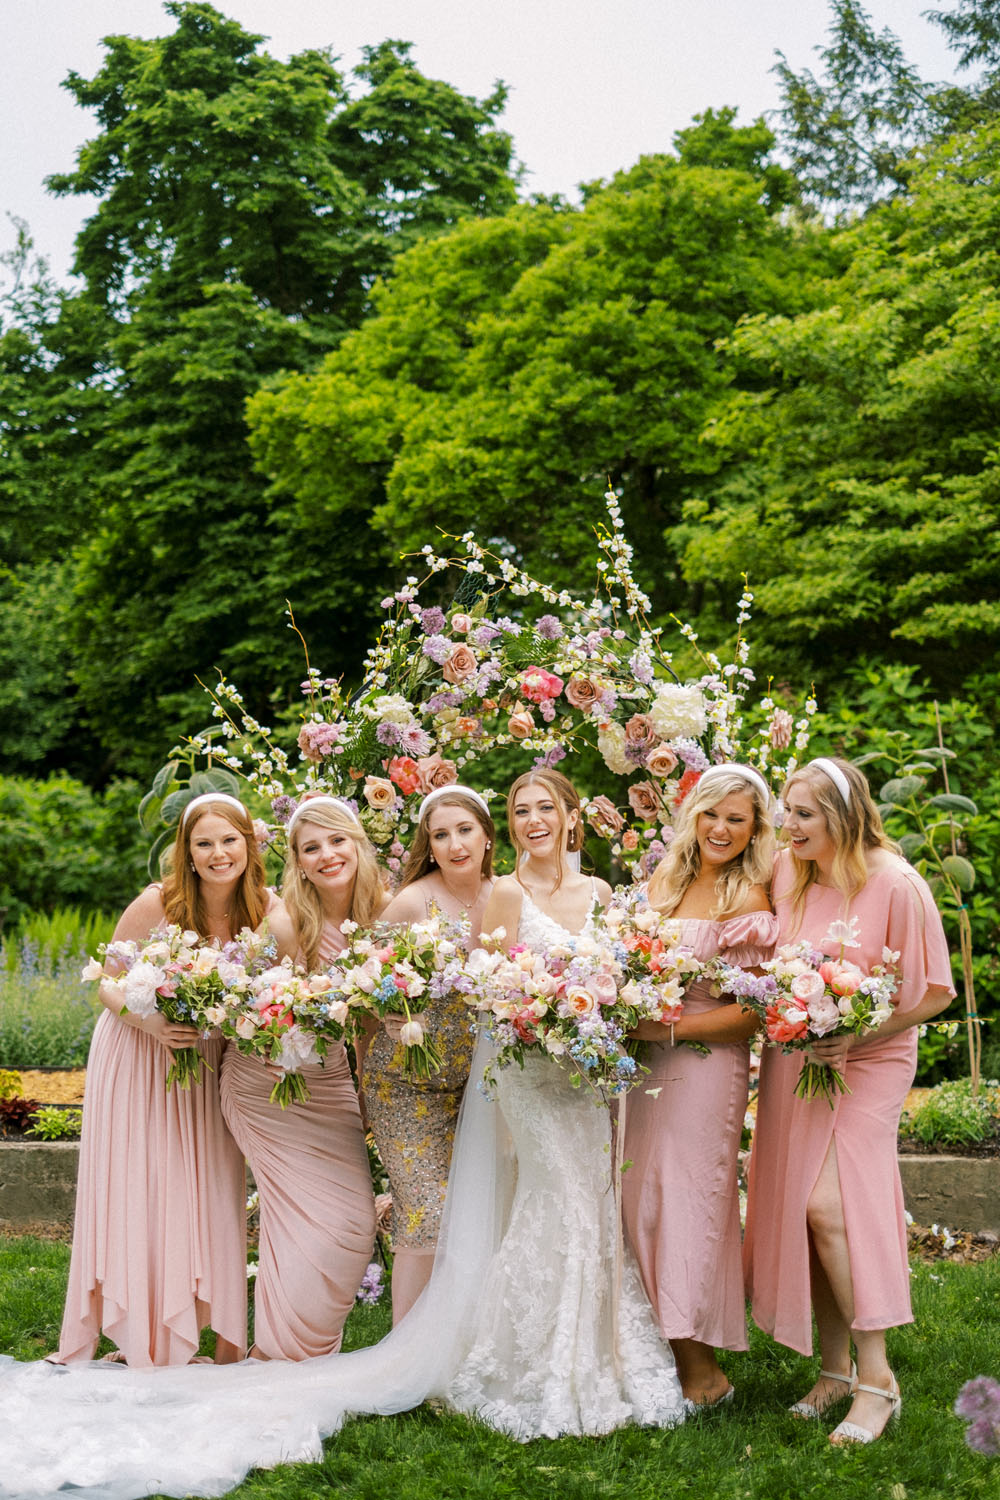 Pink bridesmaid dresses at Spring Kentucky wedding at Yew Dell Botanical Gardens